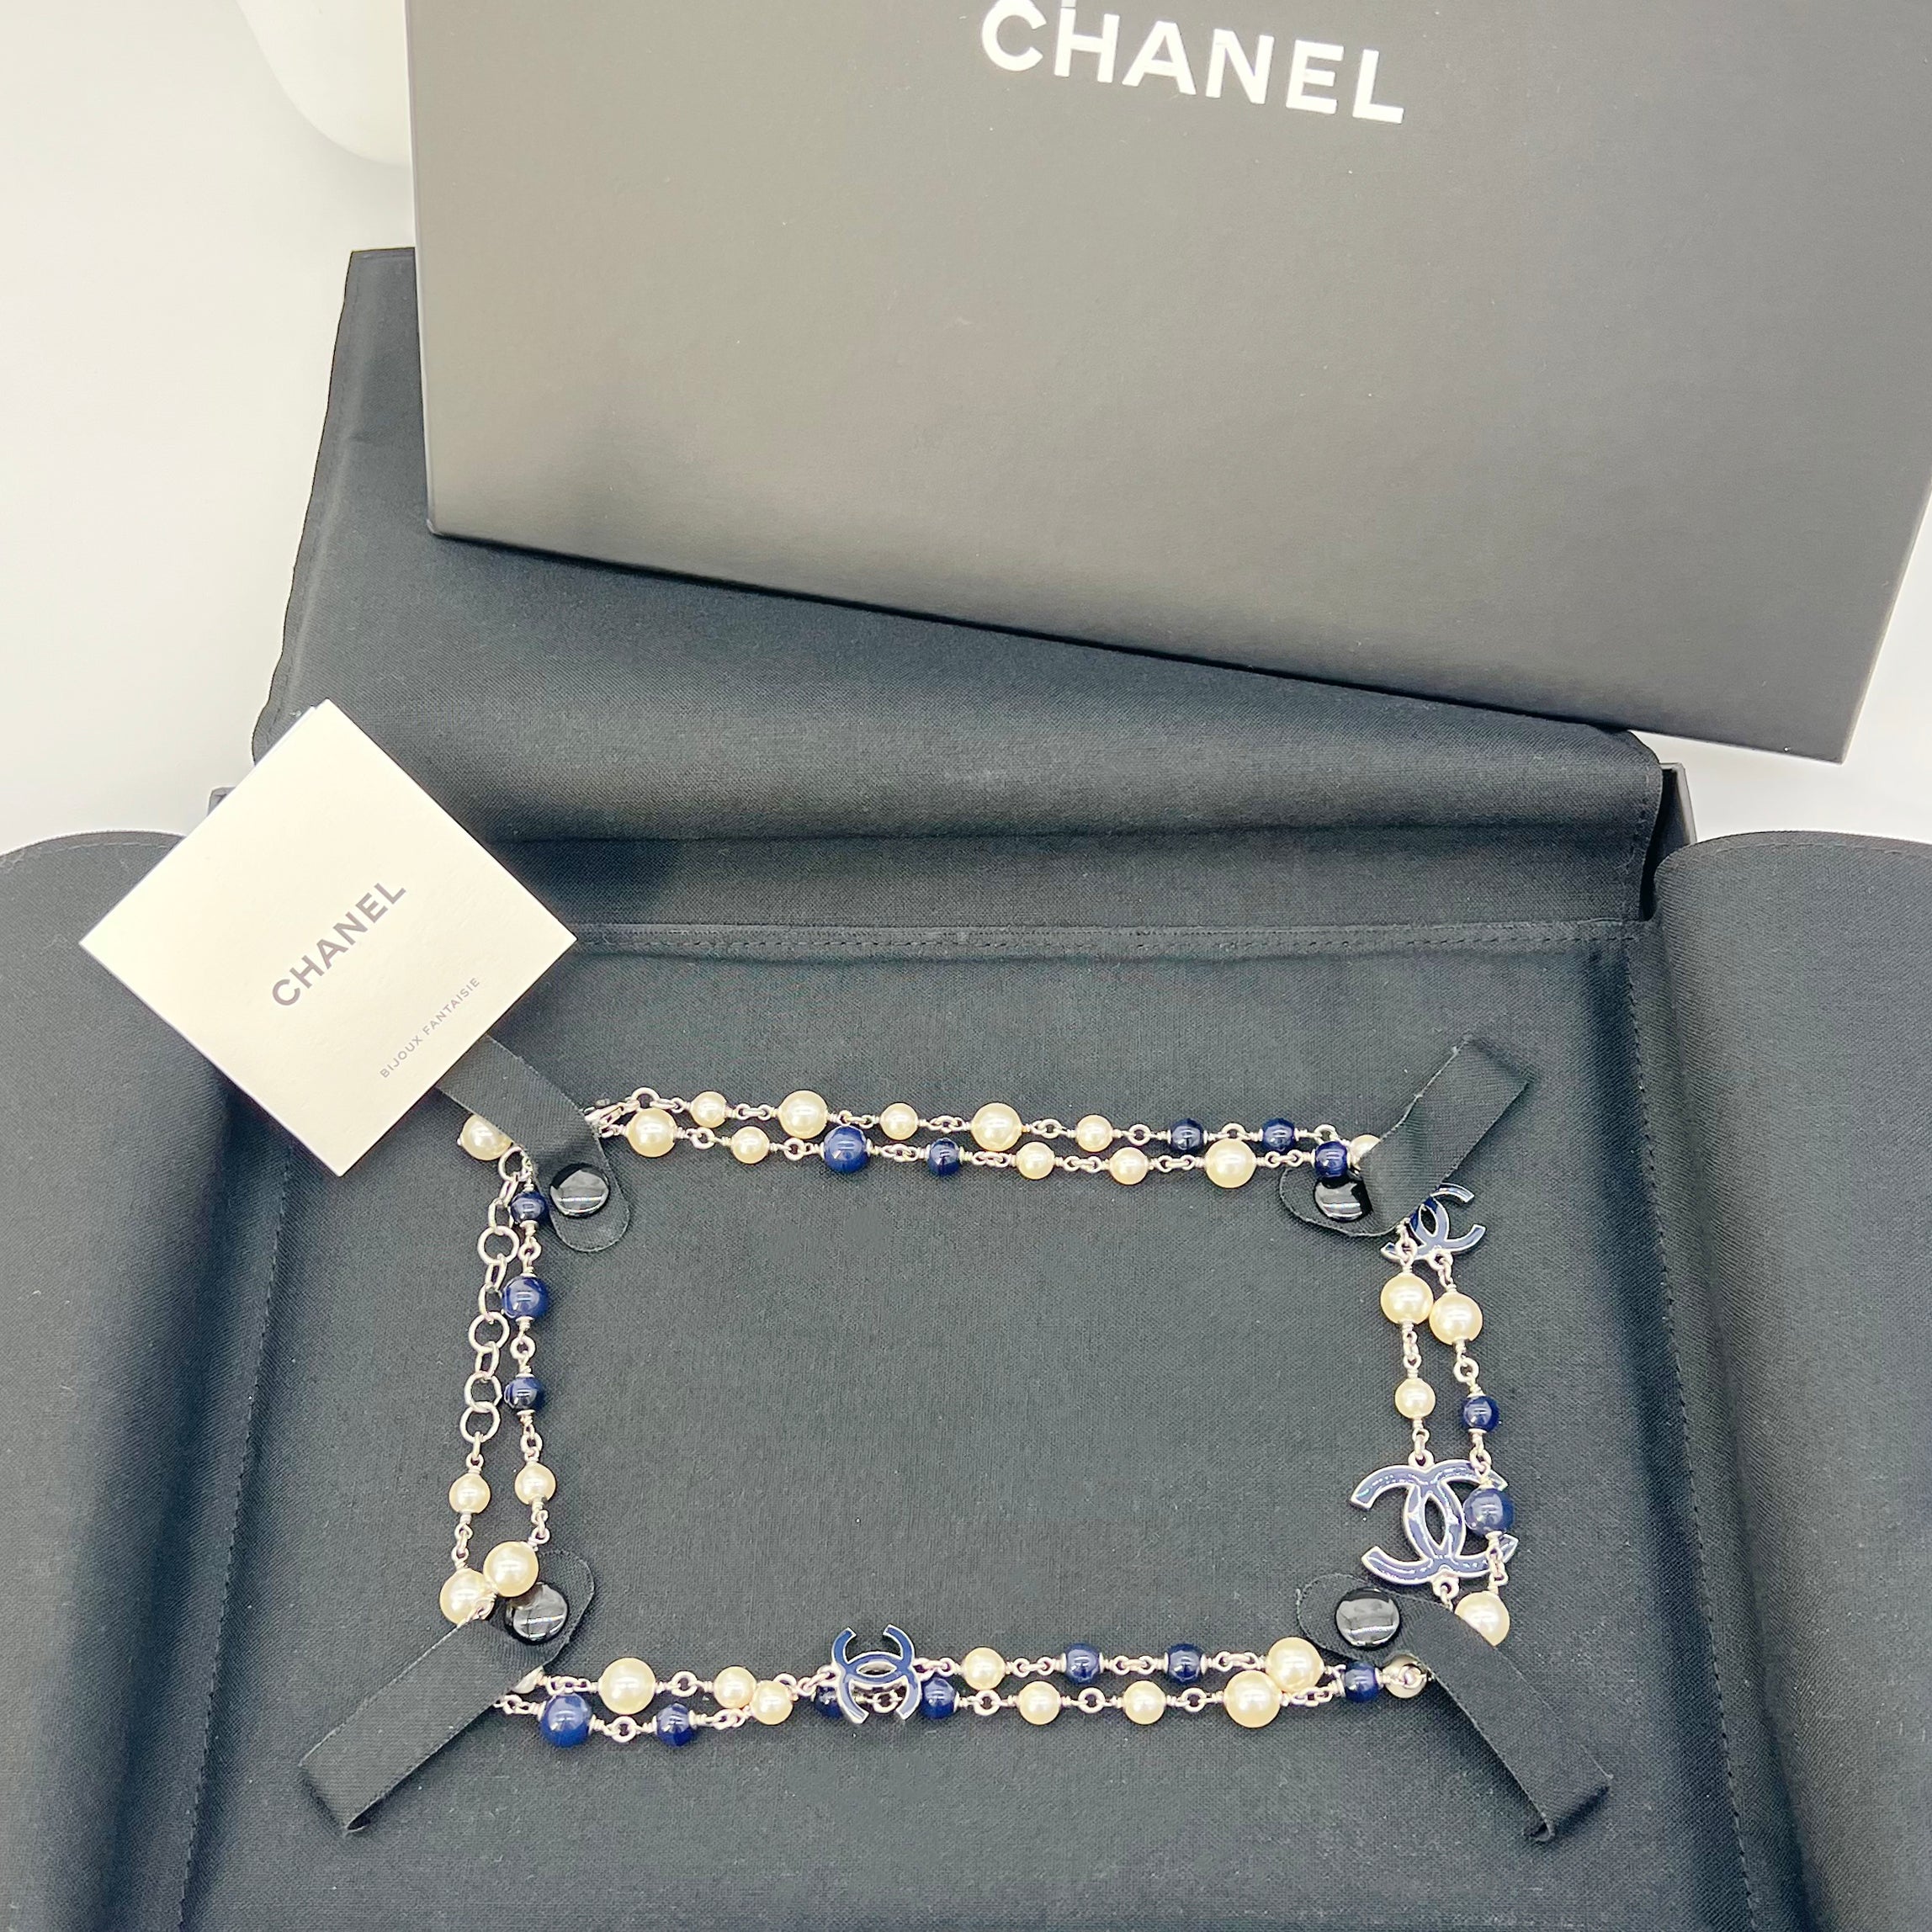 AUTHENTIC CHANEL NECKLACE  Chanel necklace, Chanel jewelry